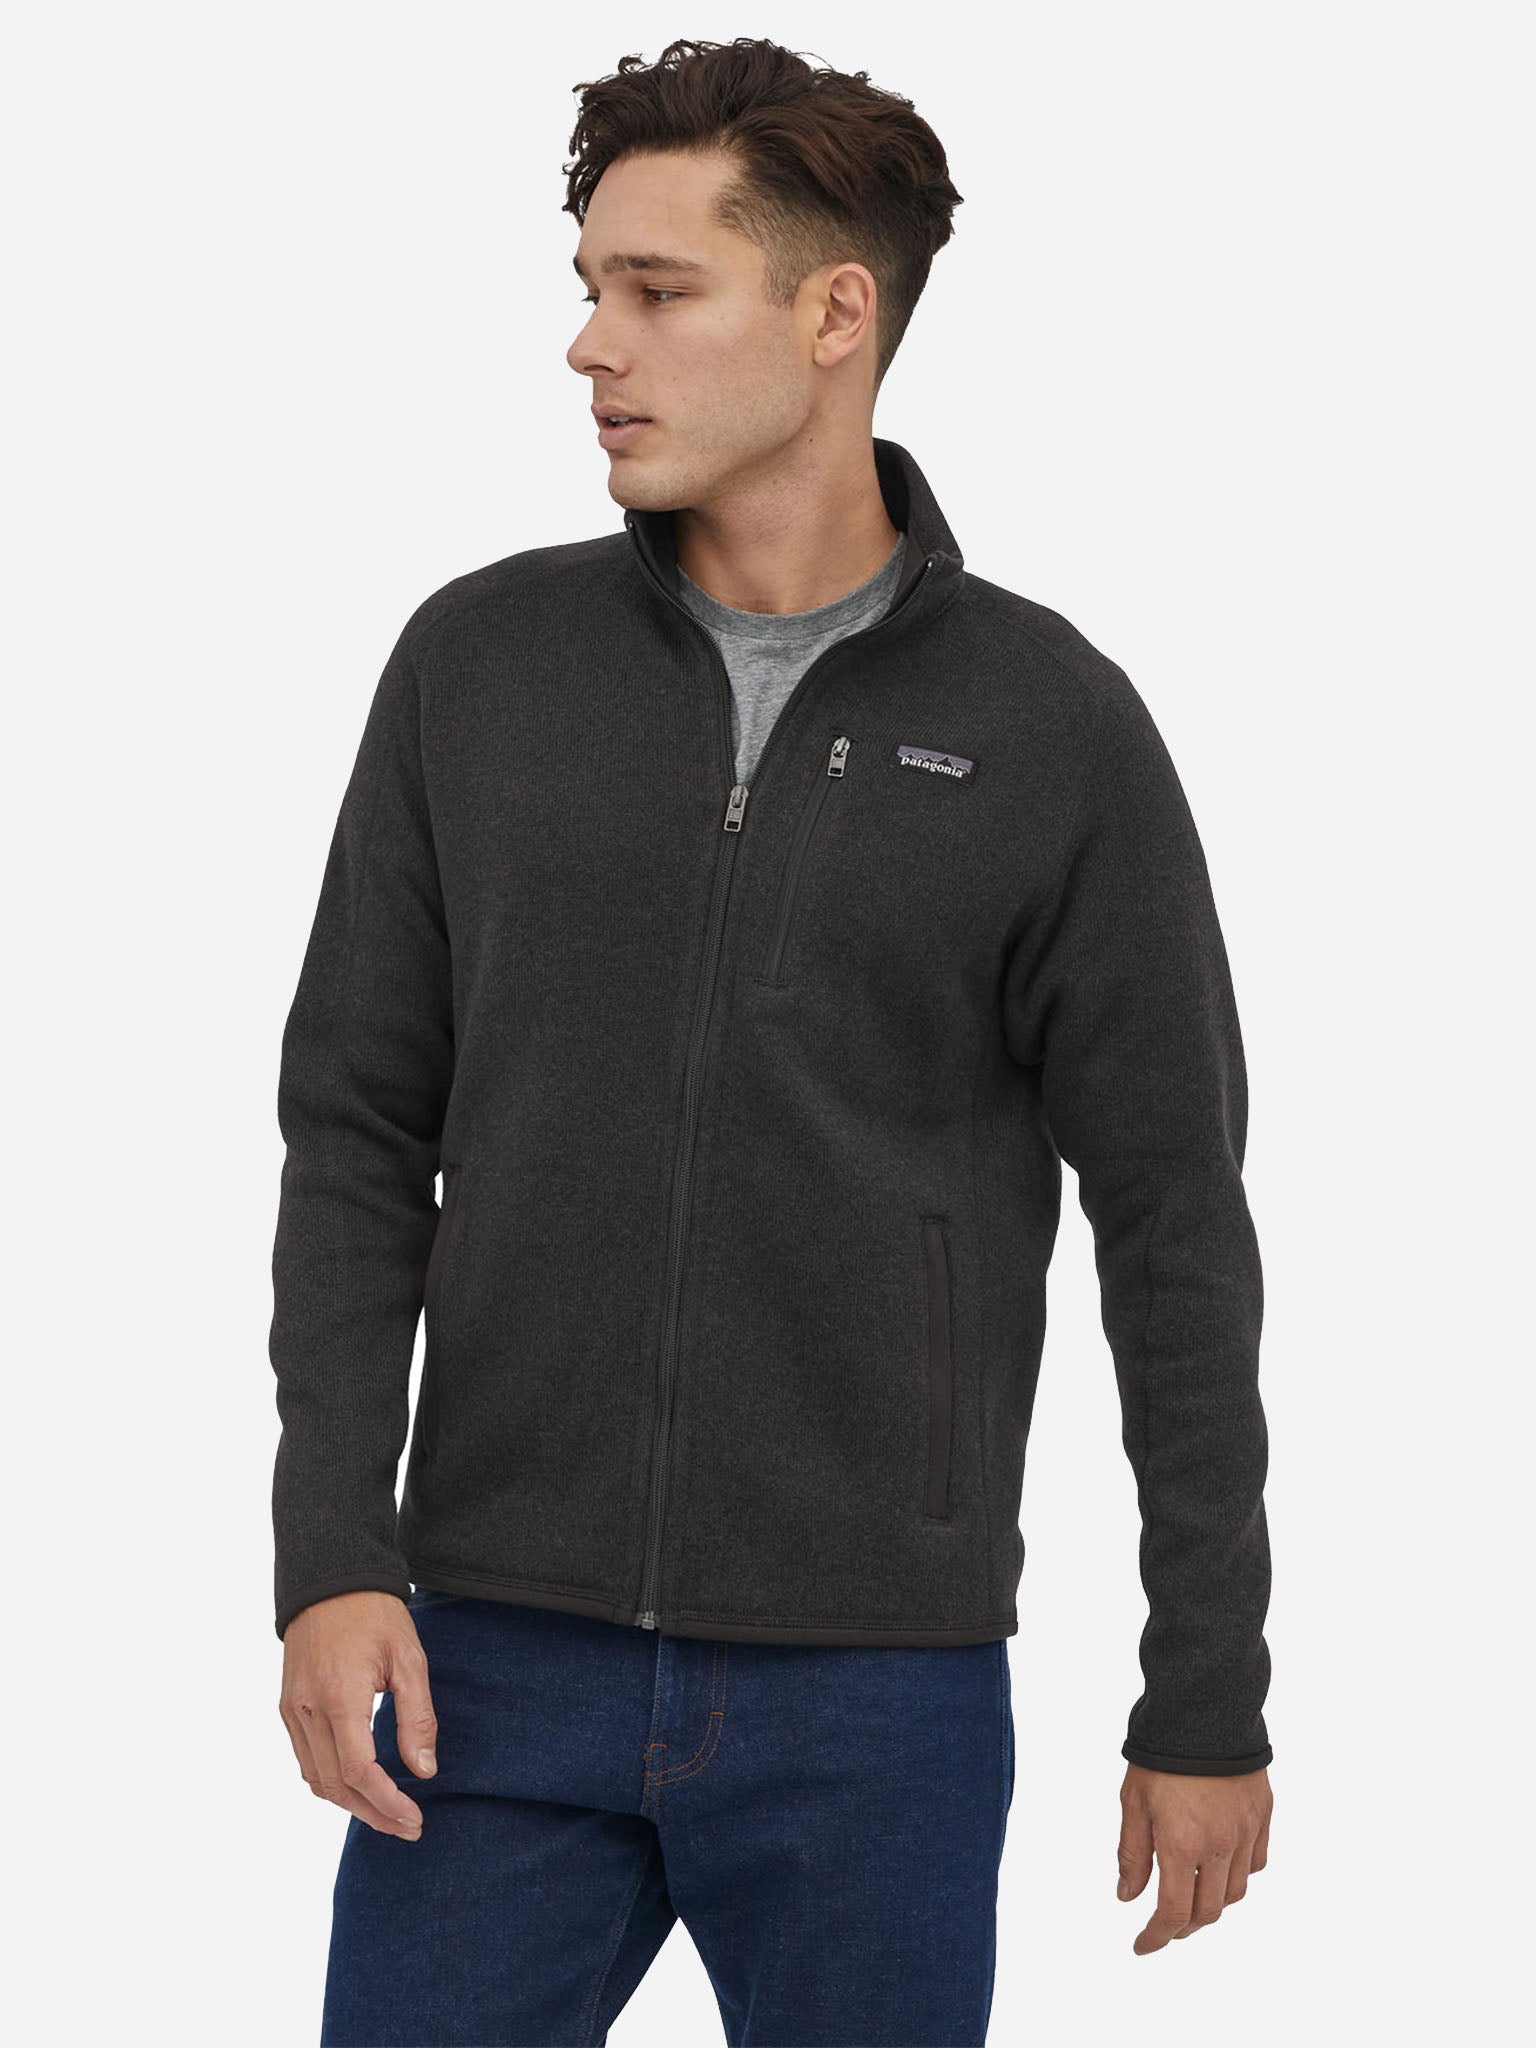 Better Sweater Fleece Jacket - Men's